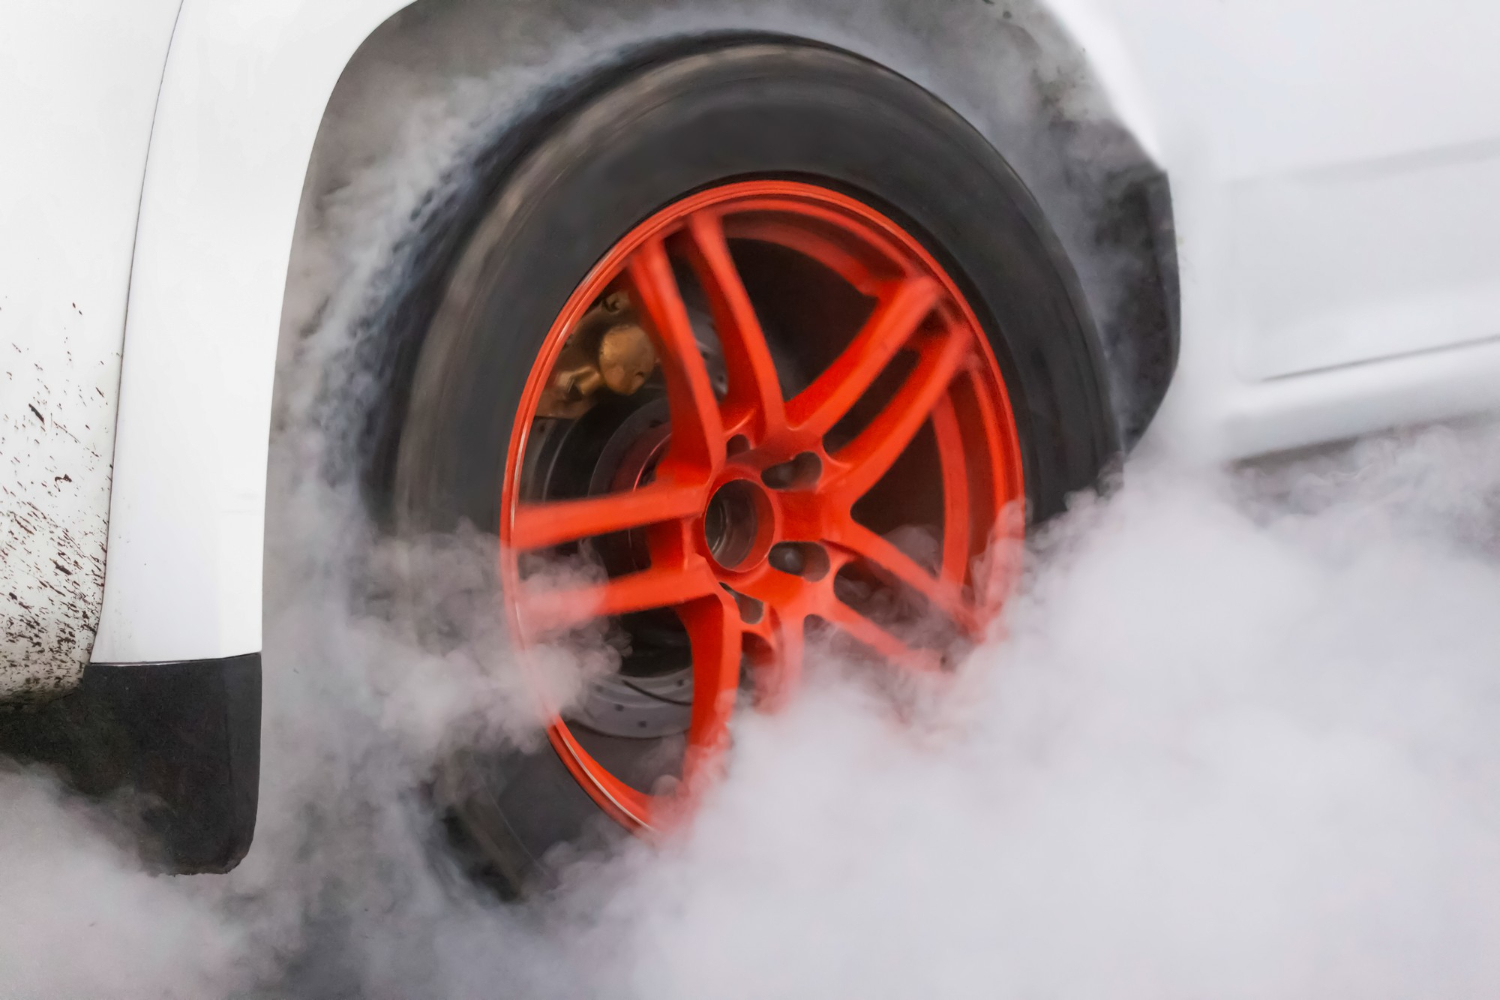 drag racing car burns rubber off its tires preparation race